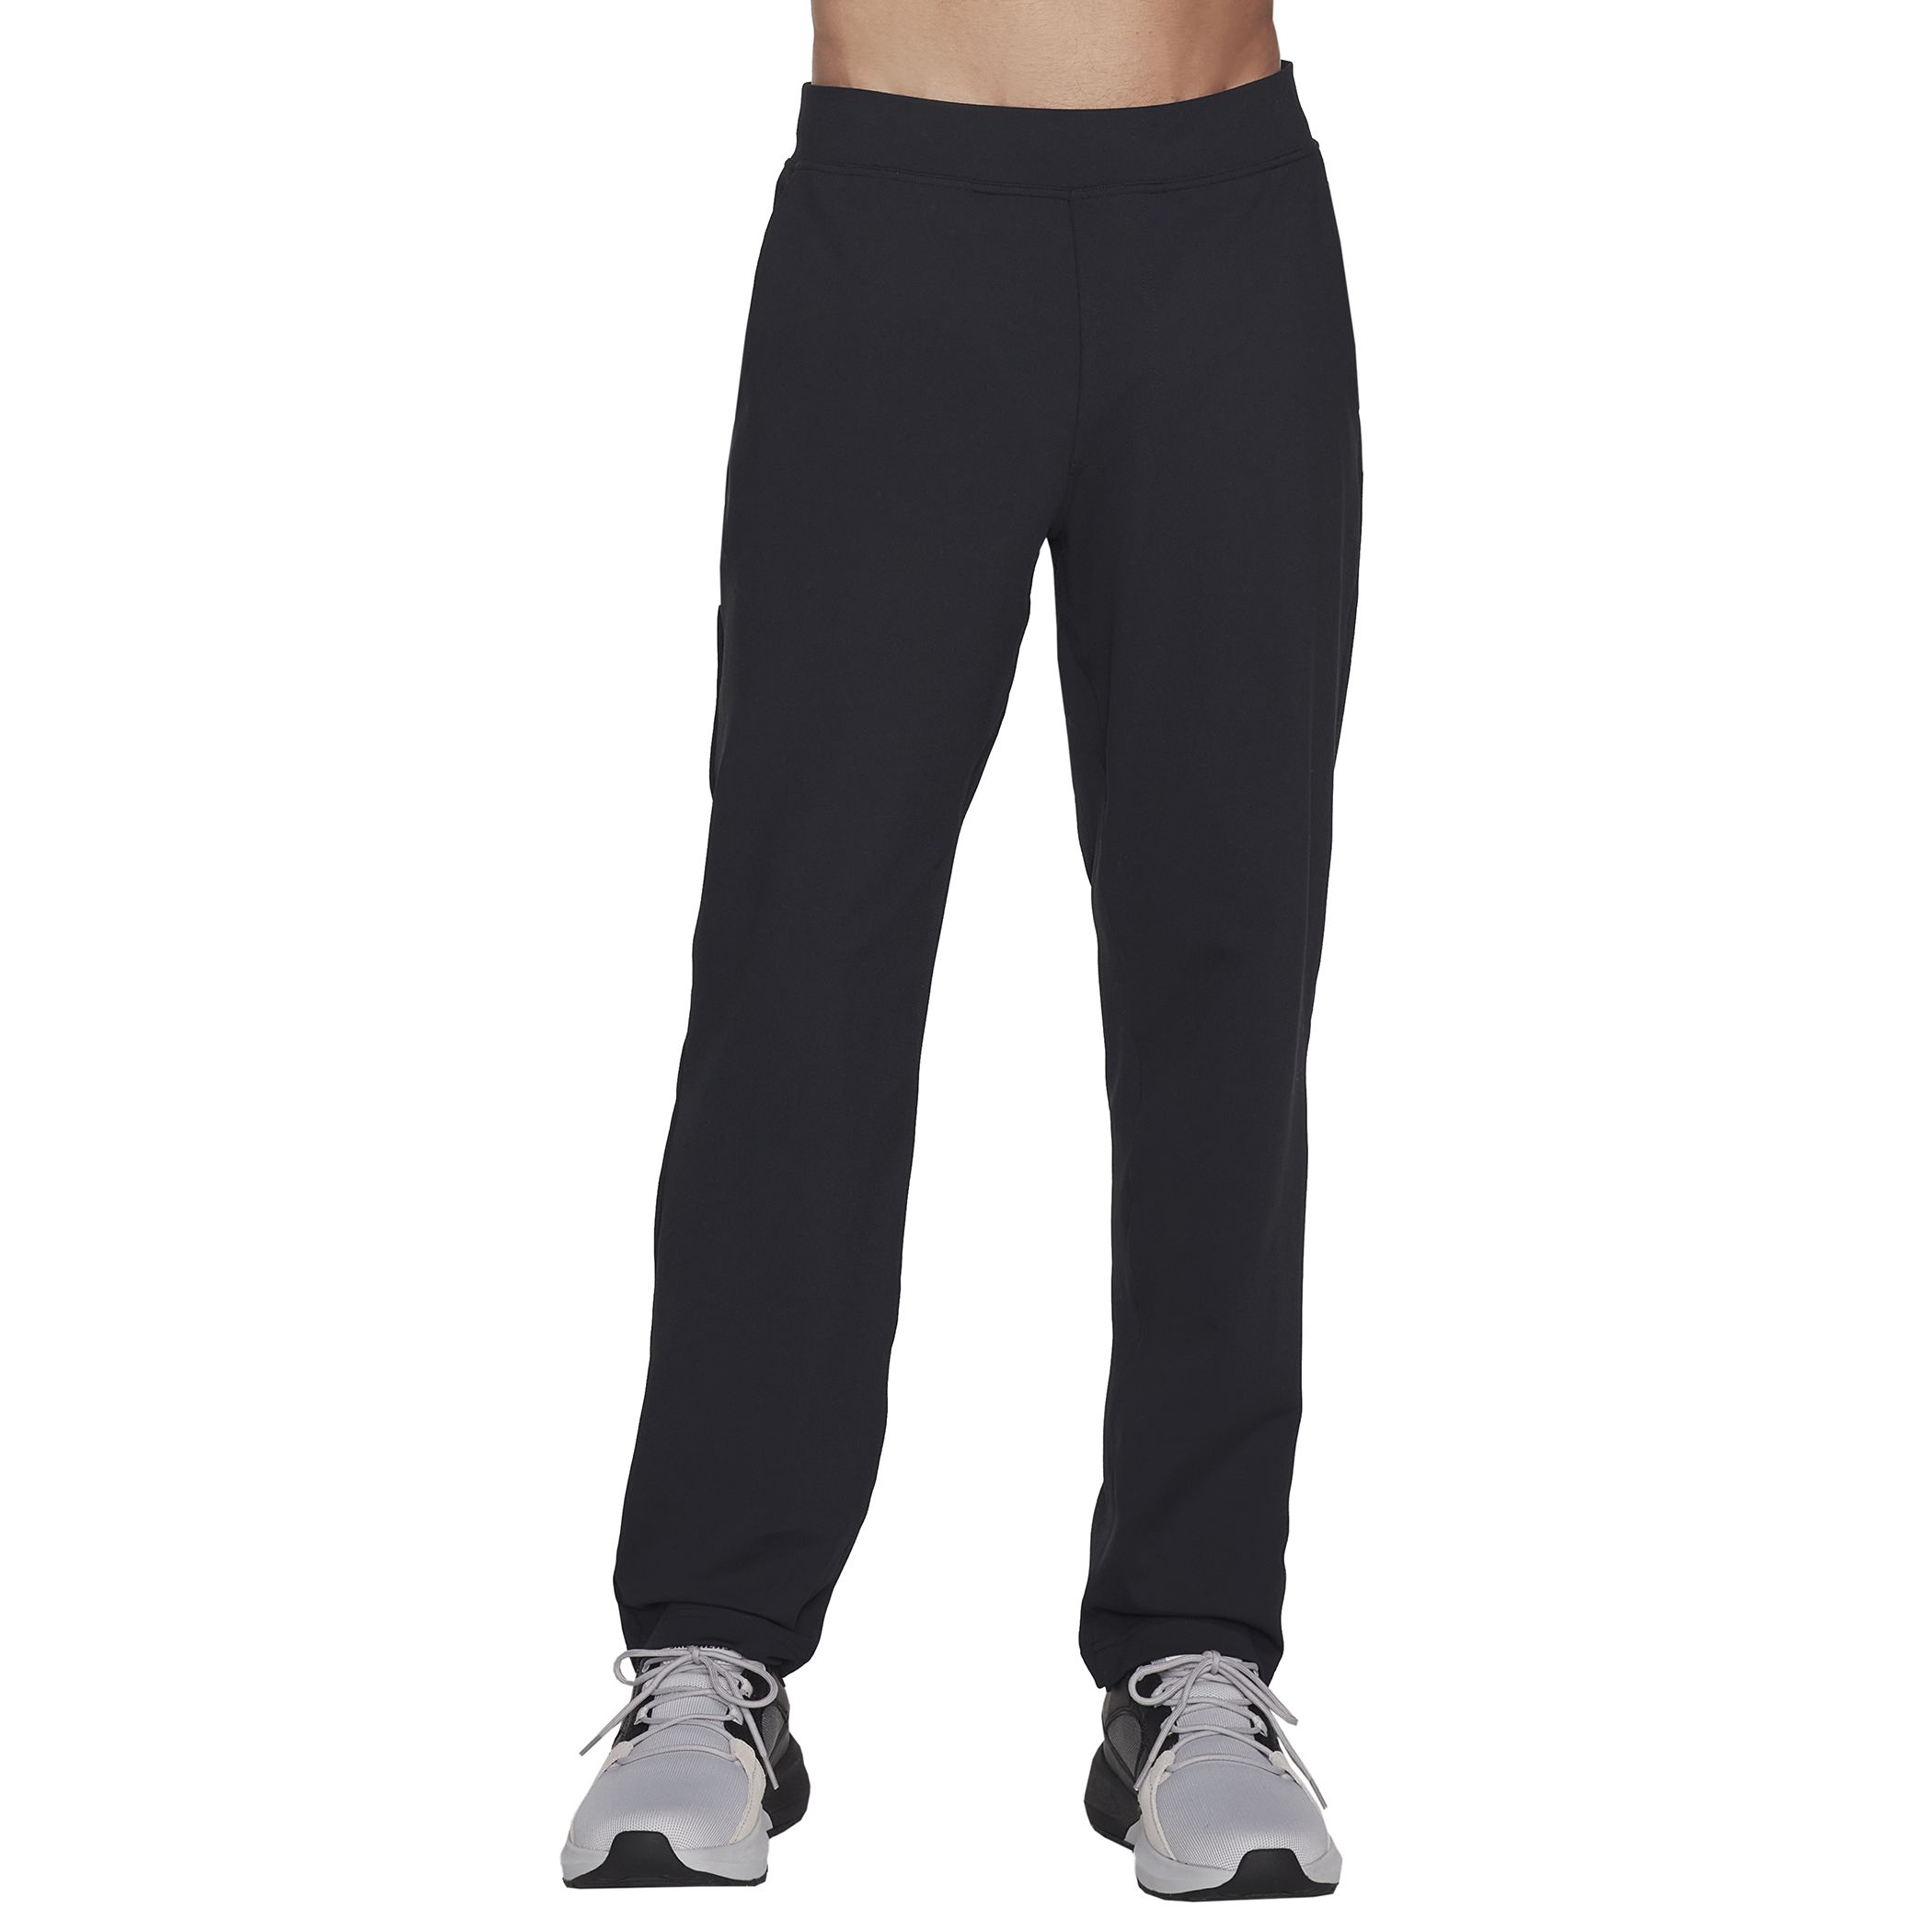 Skechers Go Walk Action Pant - Black Workout Pants For Men